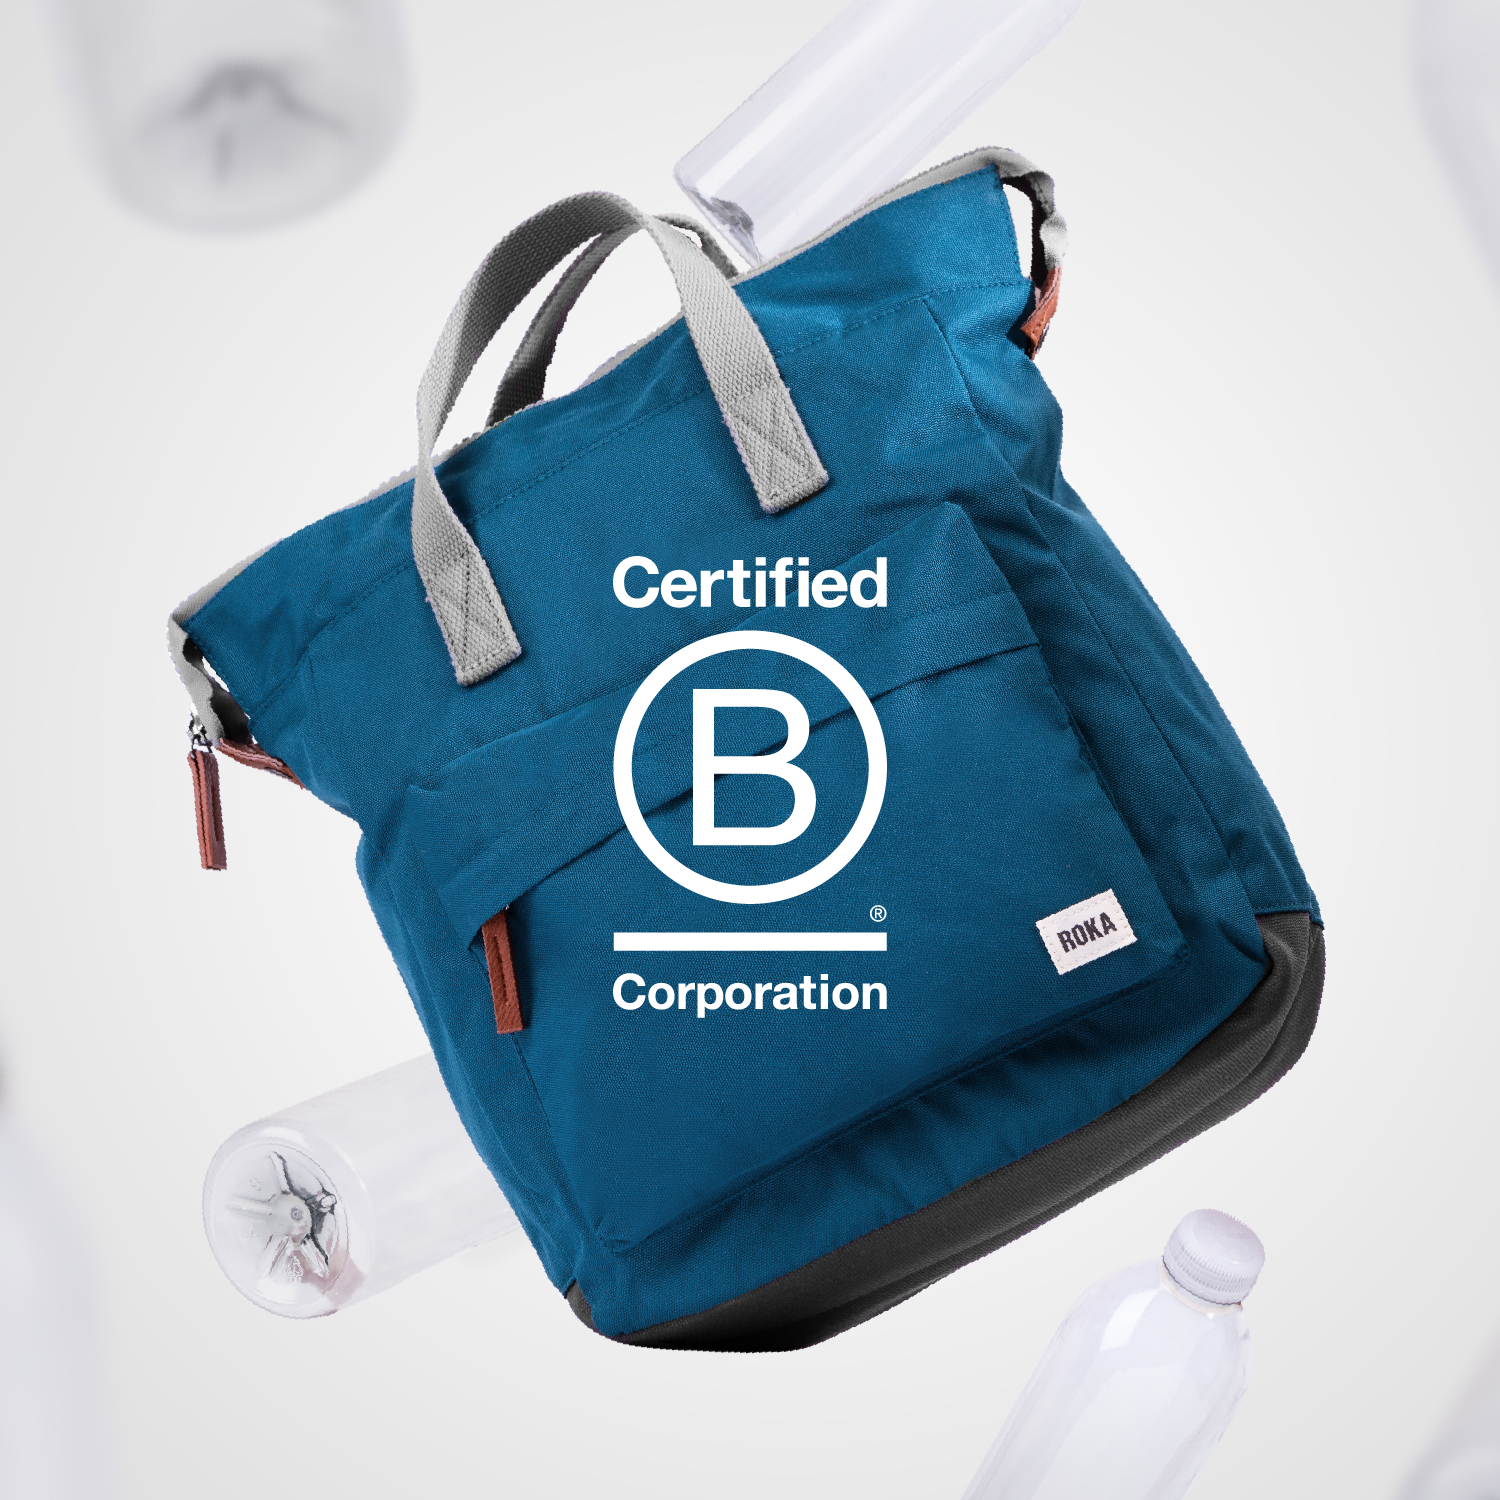 Roka London bags bag backpack b corp certified sustainable travels bags